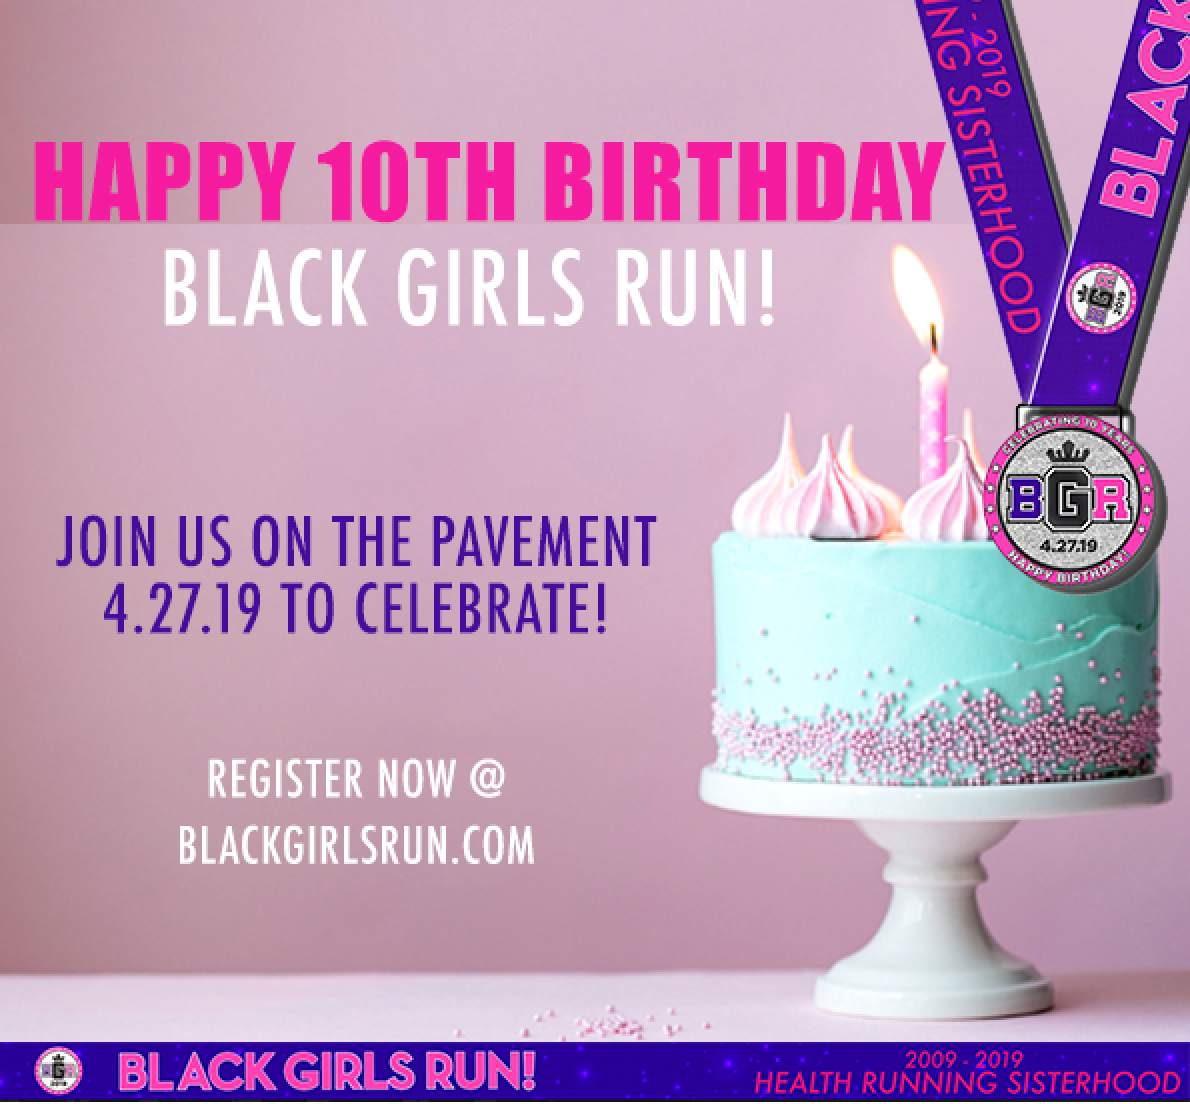 Black Girls RUN! Celebrates 10 Years on the Pavement